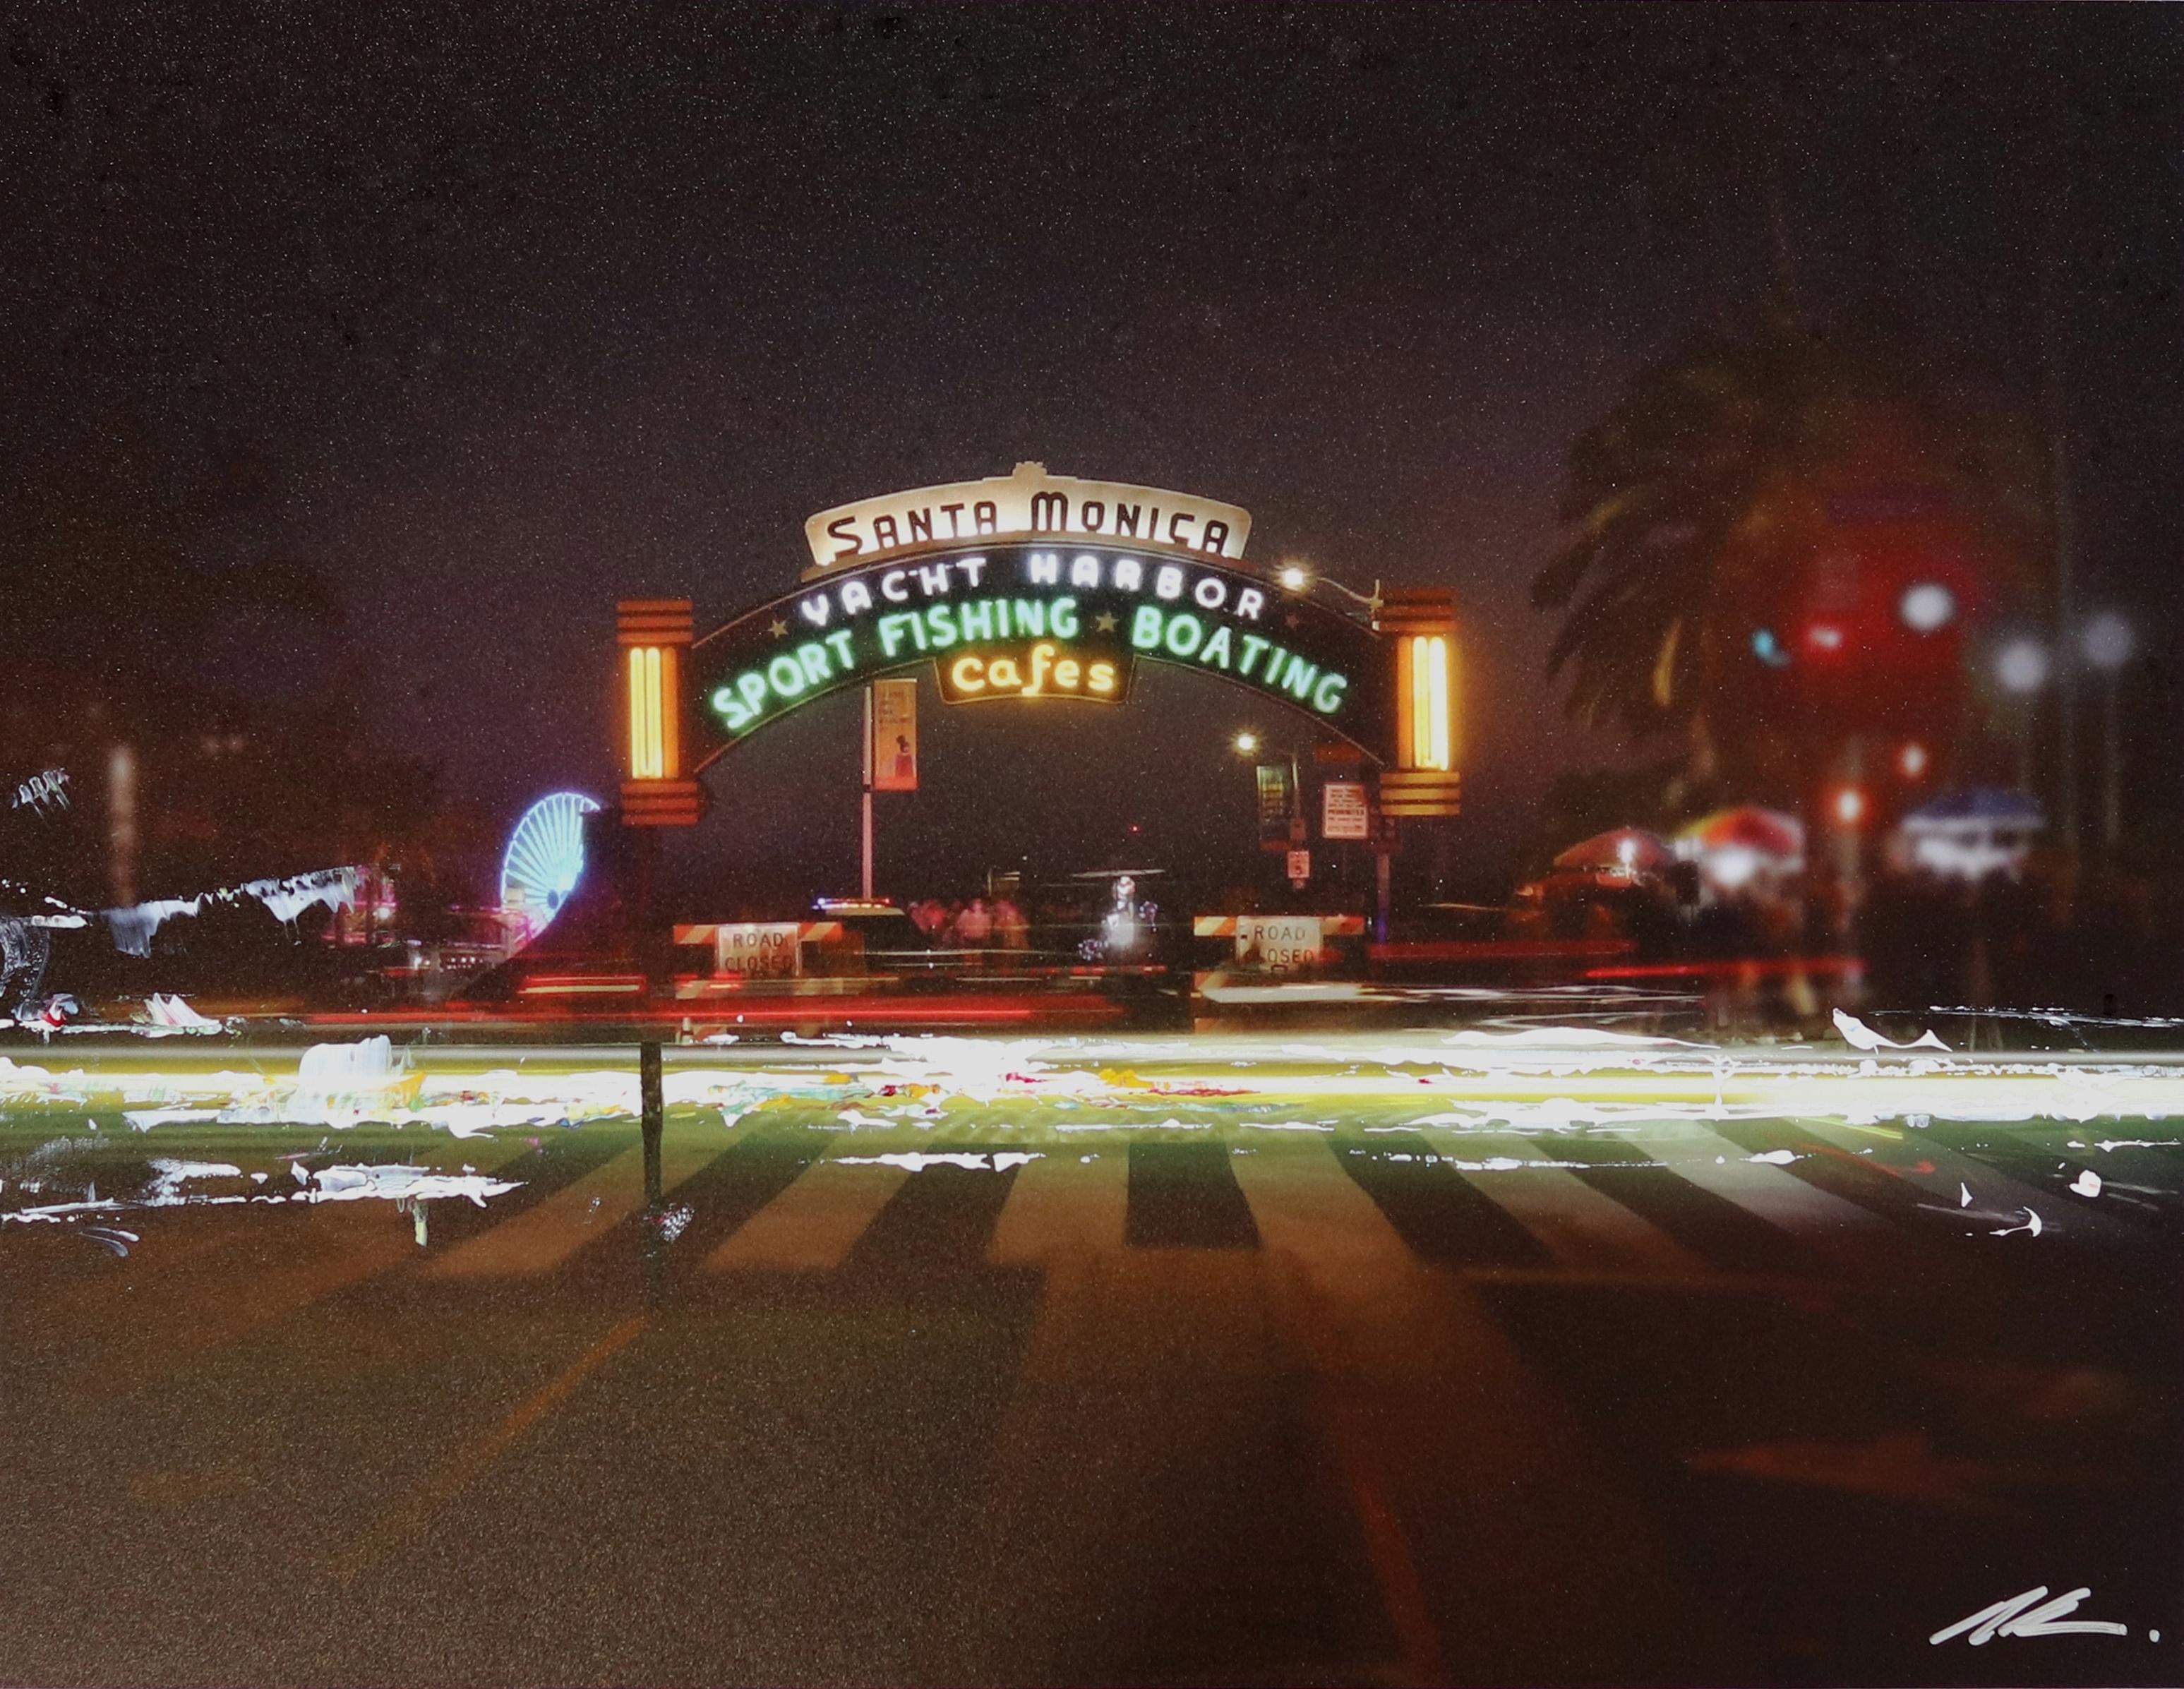 Pete Kasprzak Abstract Painting - SPIN Santa Monica Pier - Urban Landscape Photography Painting Original Art